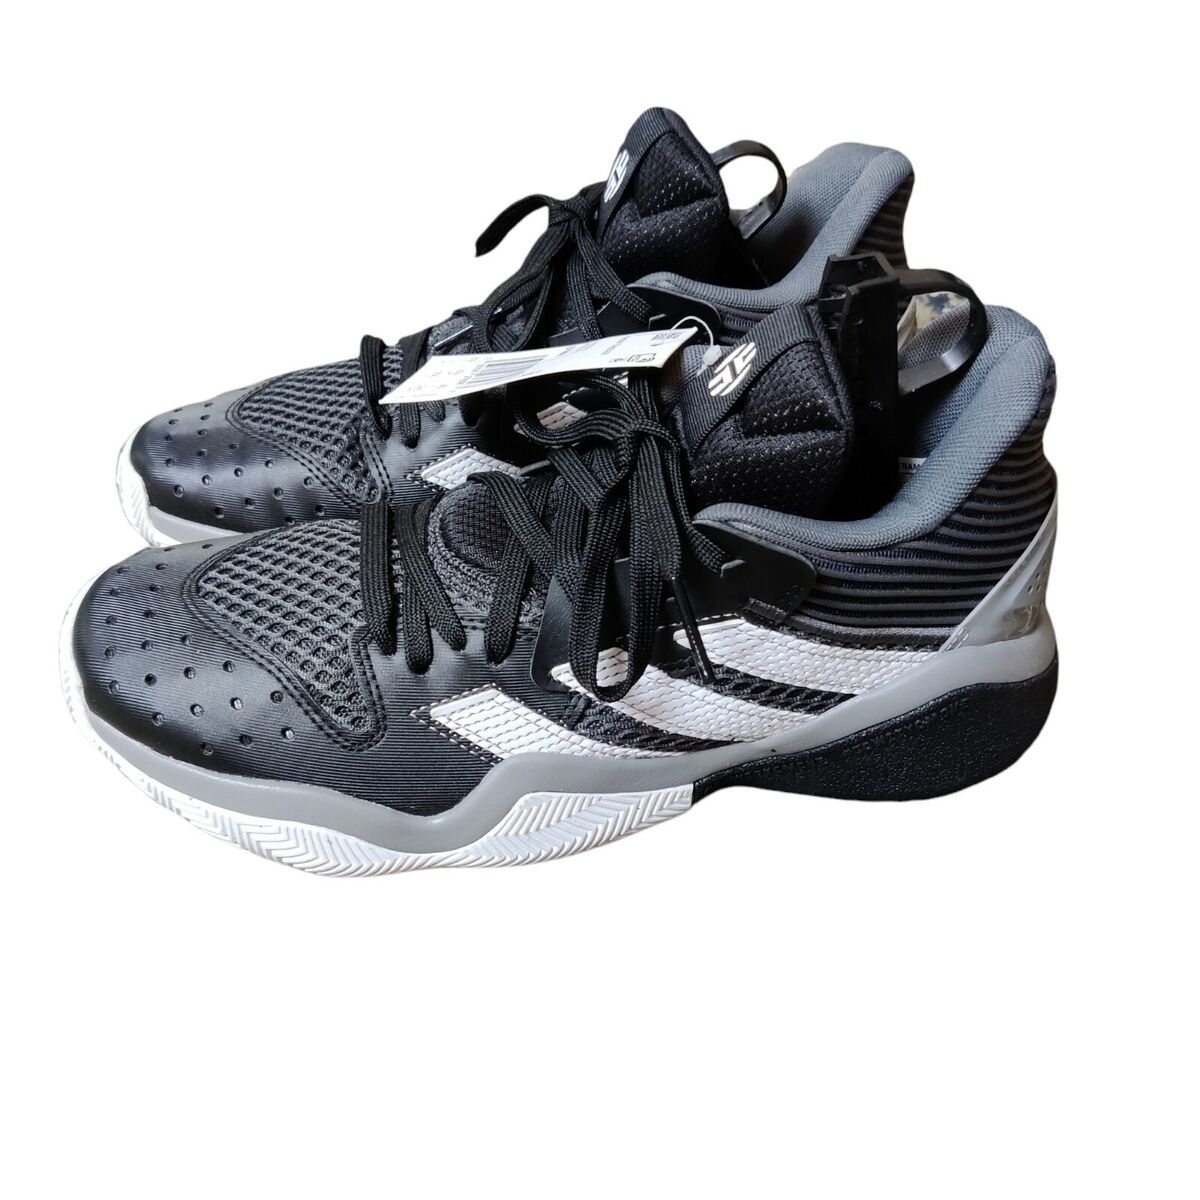 Adidas James Harden Bounce Black Basketball Shoes Men Size | eBay